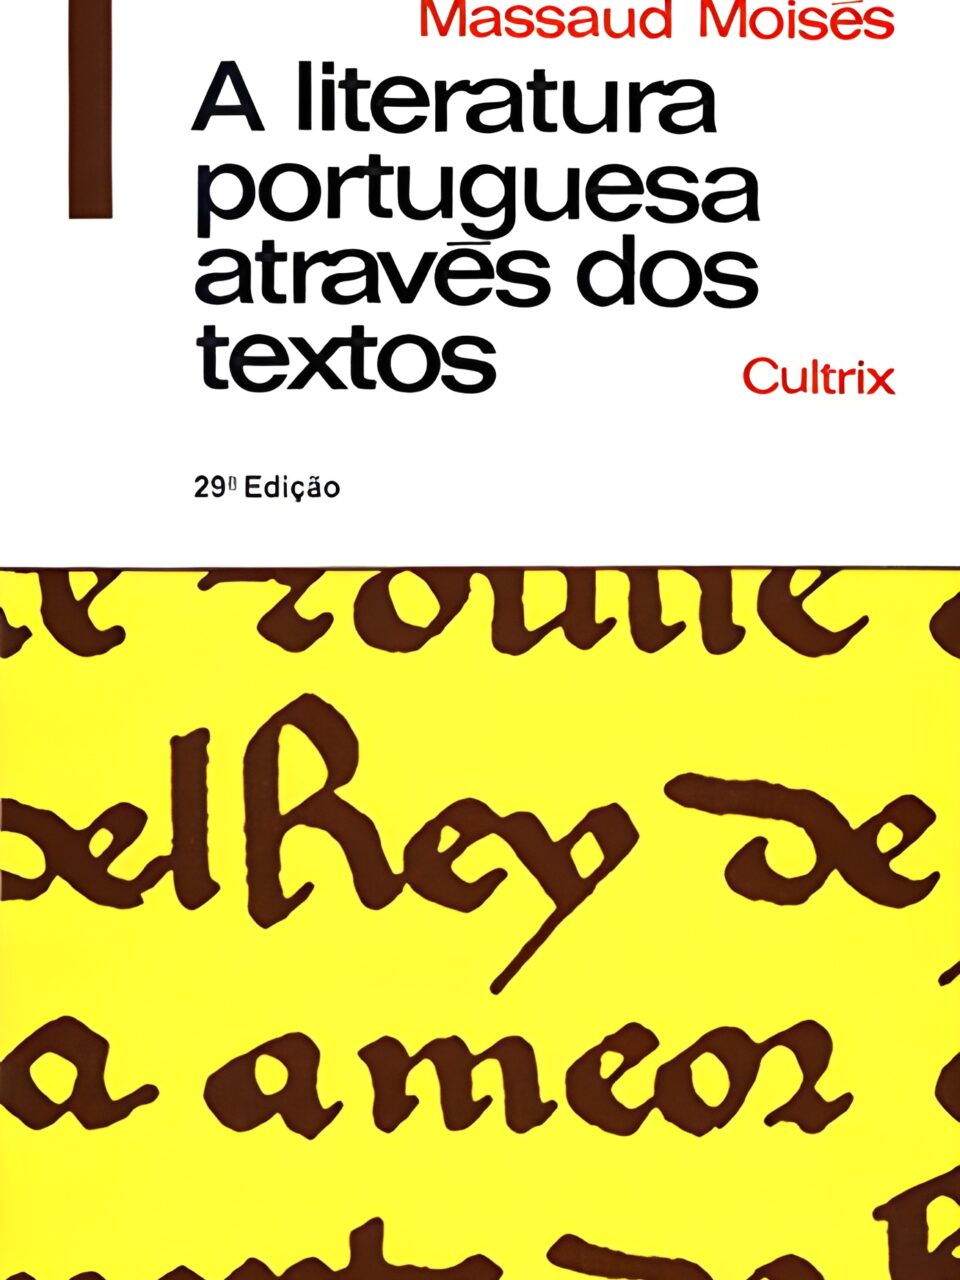 A literatura portuguesa através dos textos - Massaud Moisés